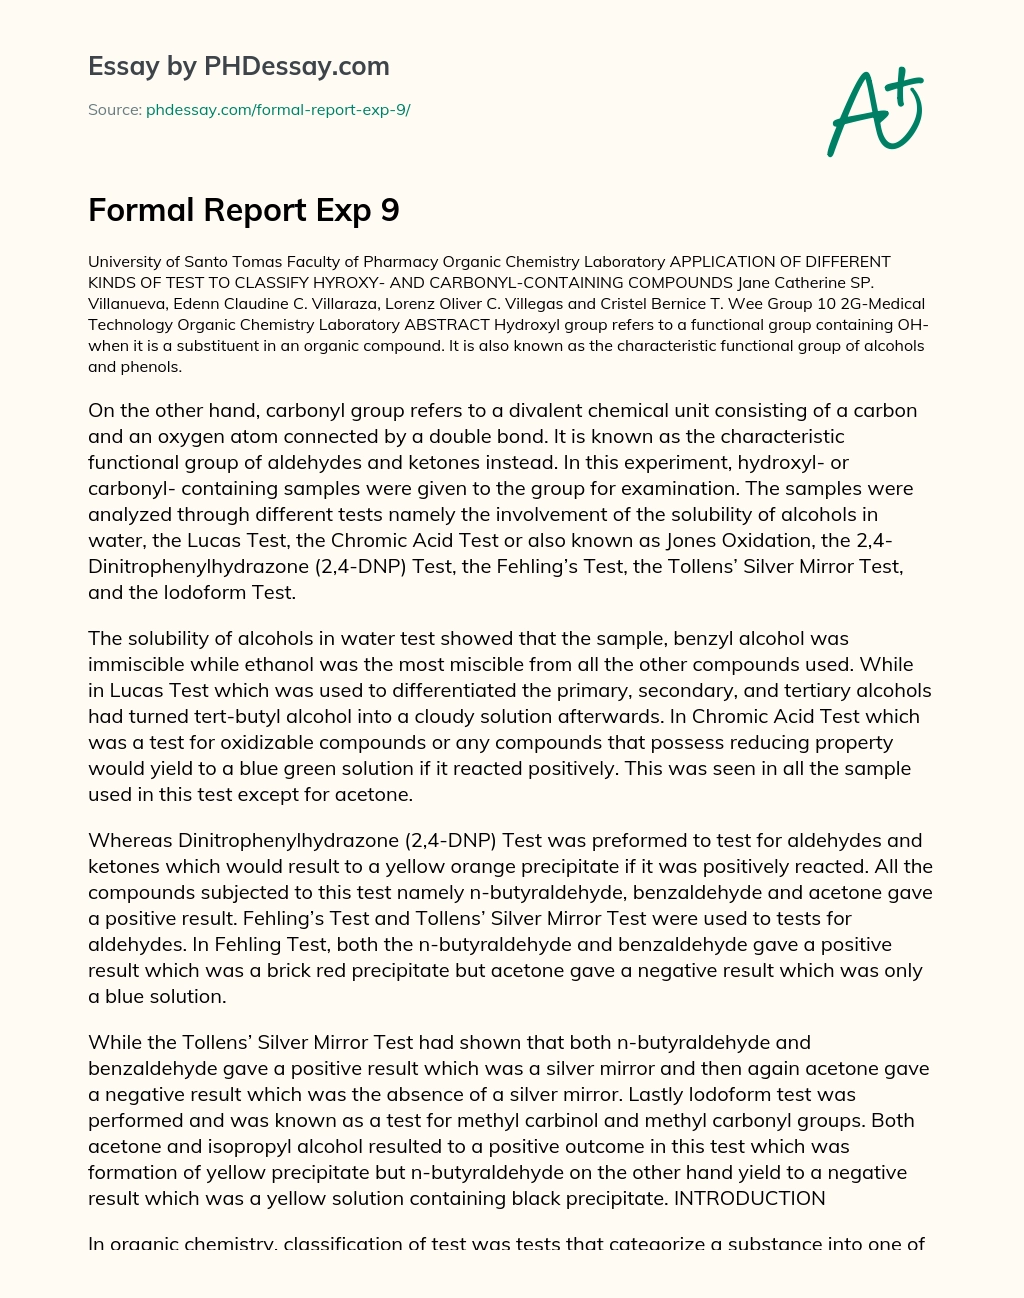 Formal Report Exp 9 essay